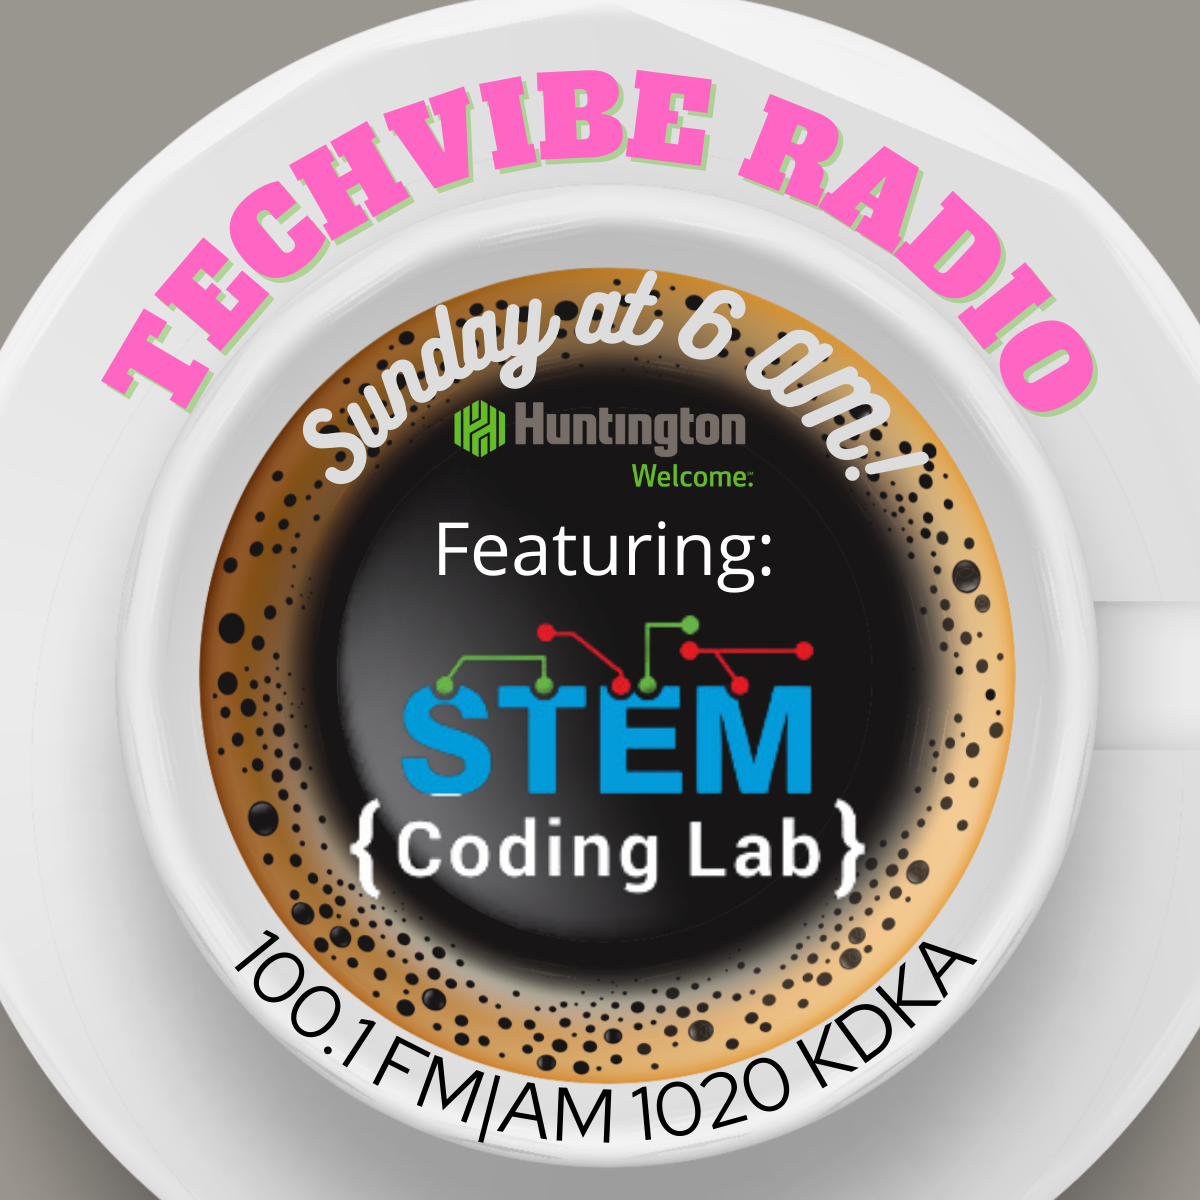 STEM Coding Lab | TechVibe Radio